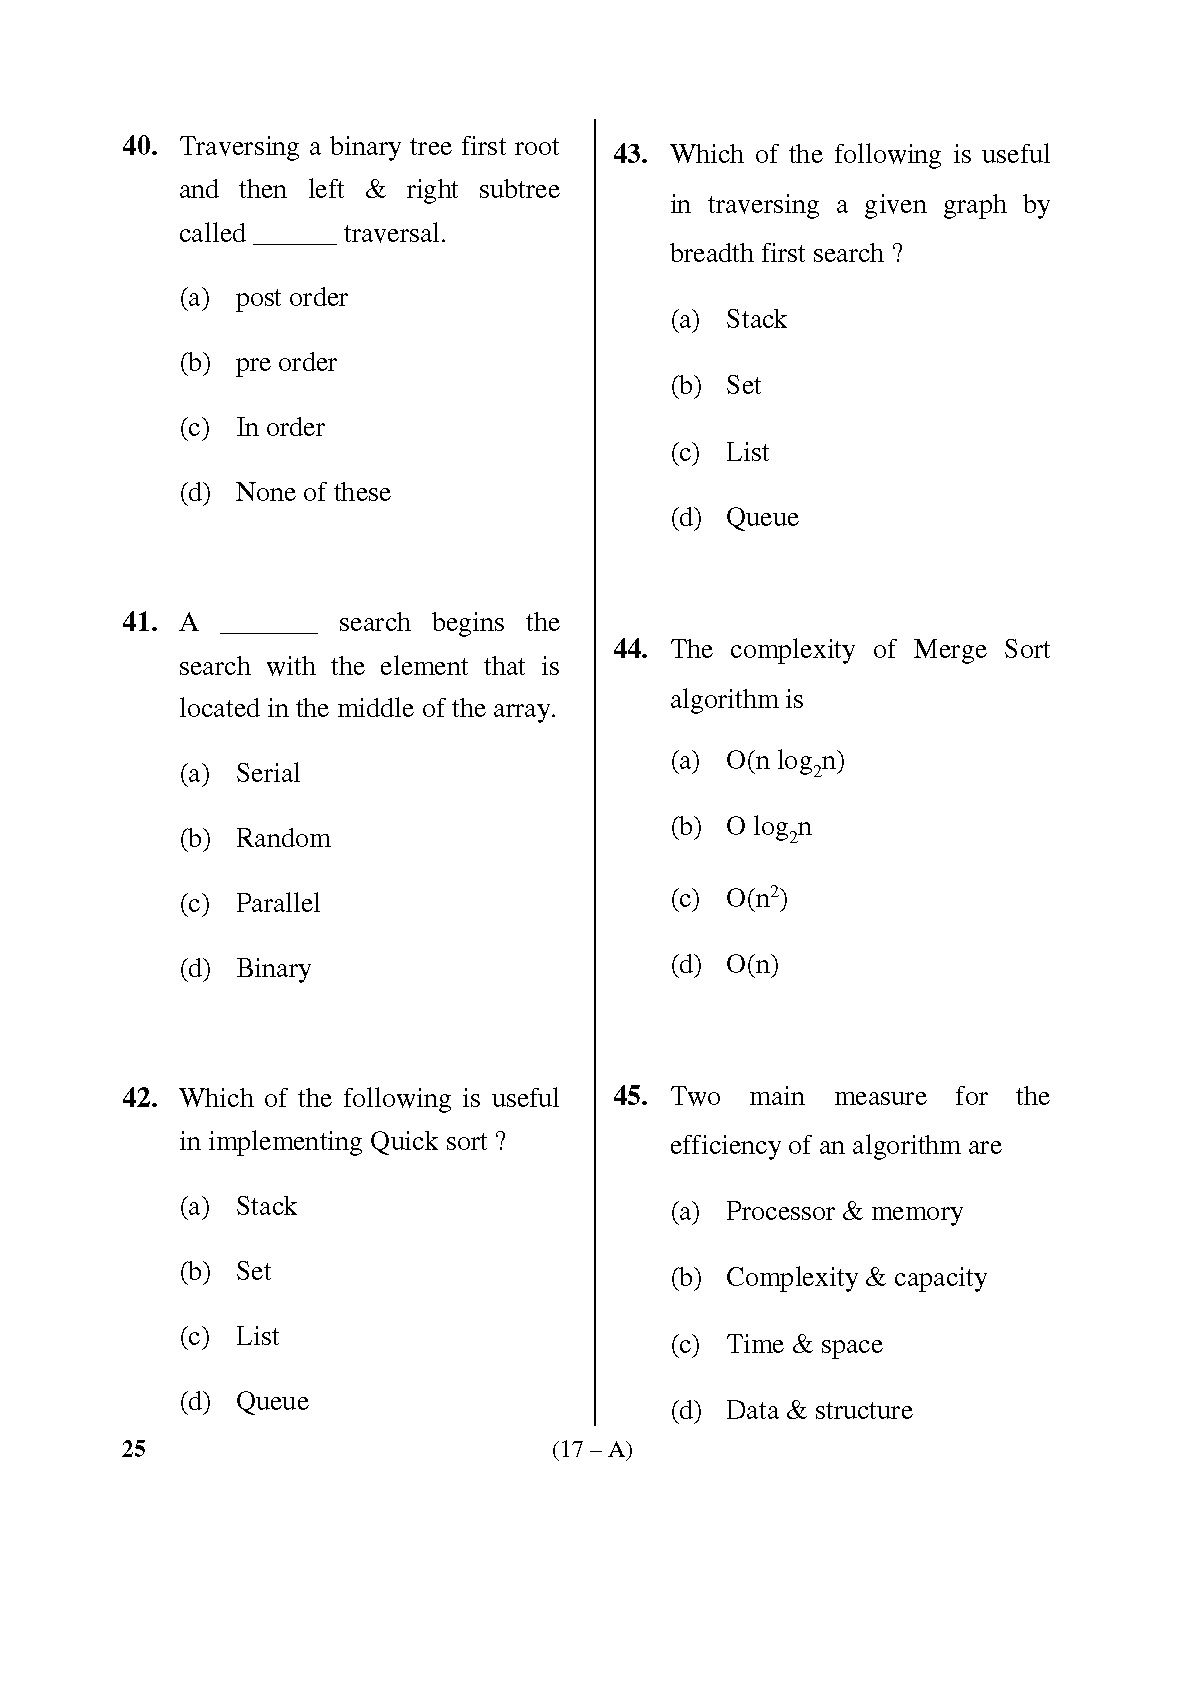 Karnataka PSC Computer Science Teachers Exam Sample Question Paper Subject code 25 17